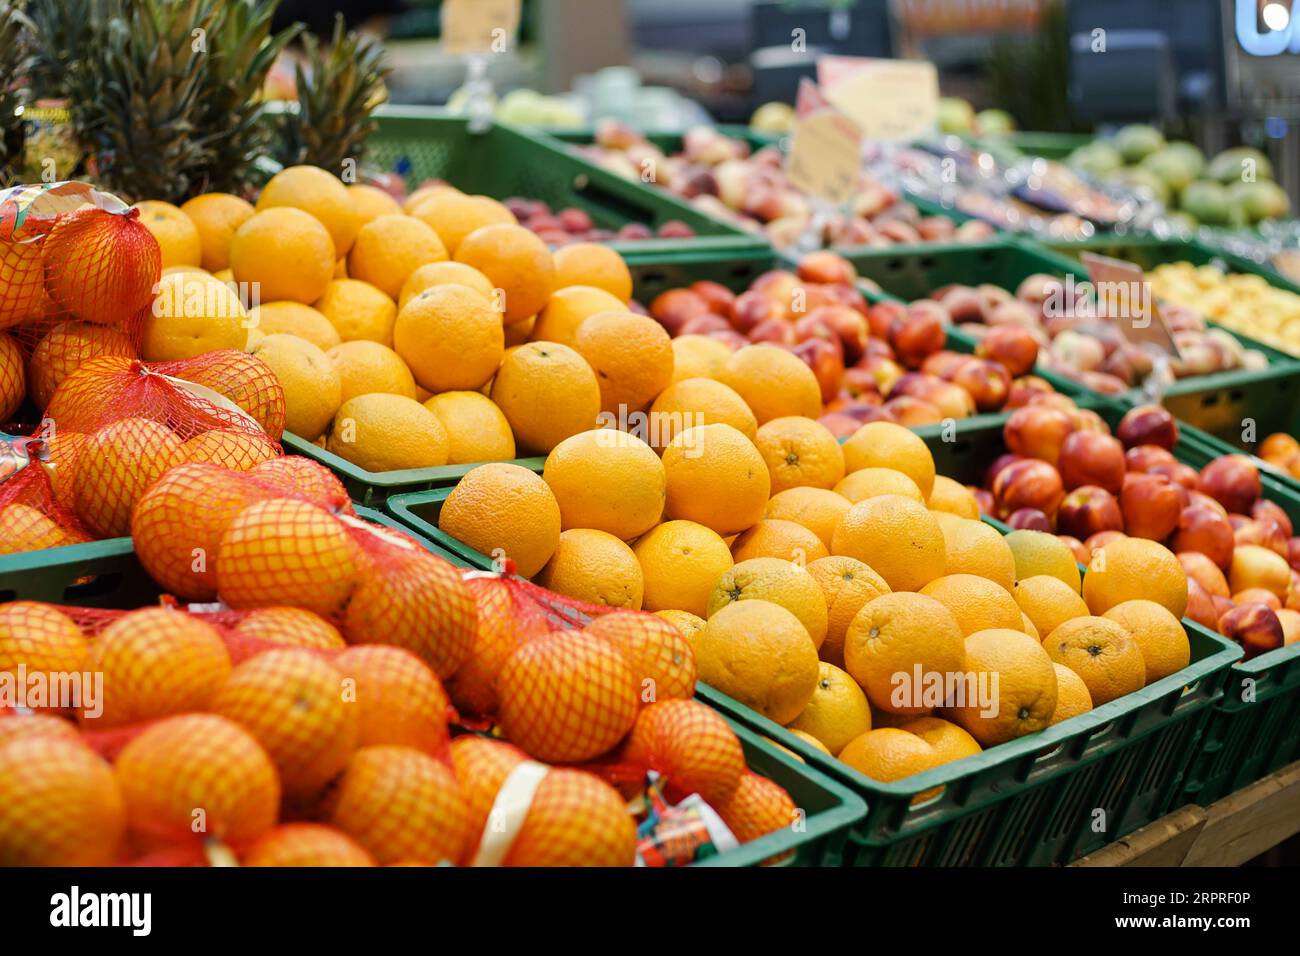 https://c8.alamy.com/comp/2RPRF0P/shelf-with-fresh-healthy-fruits-in-supermarket-2RPRF0P.jpg